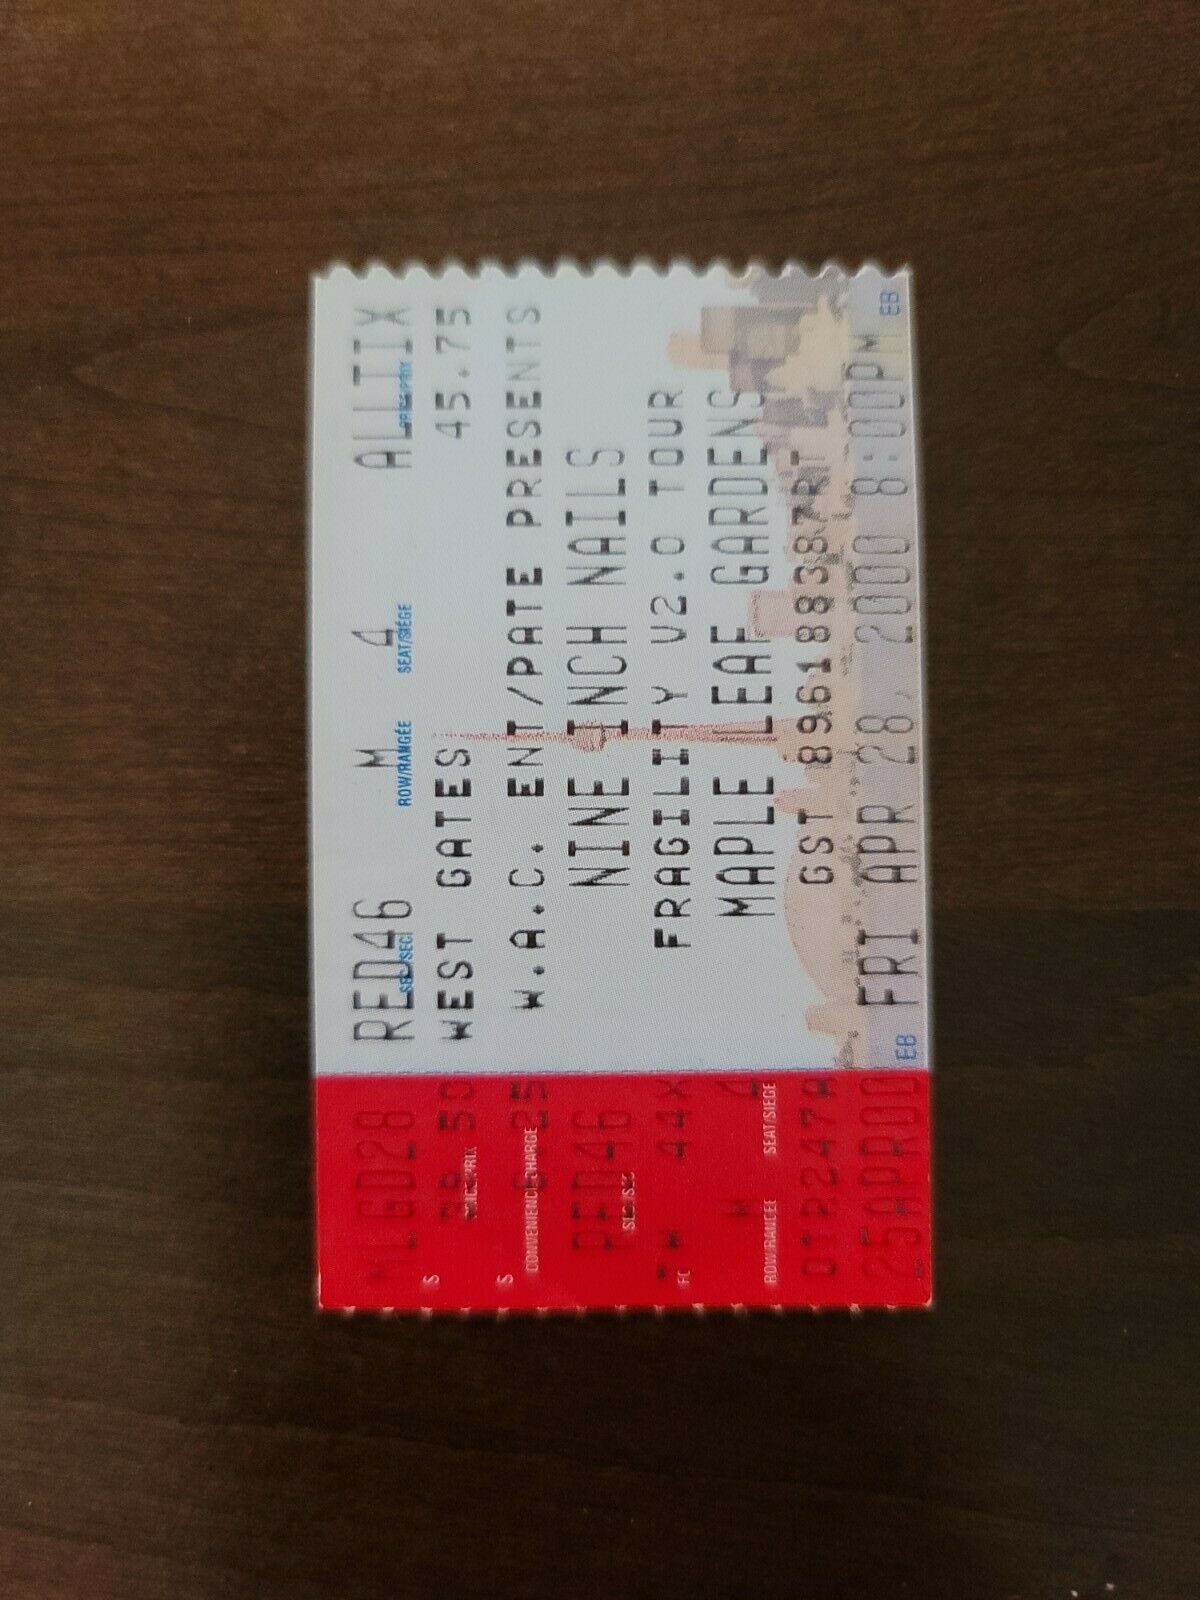 Nine Inch Nails 2000, Toronto Maple Leaf Gardens Original Concert Ticket Stub